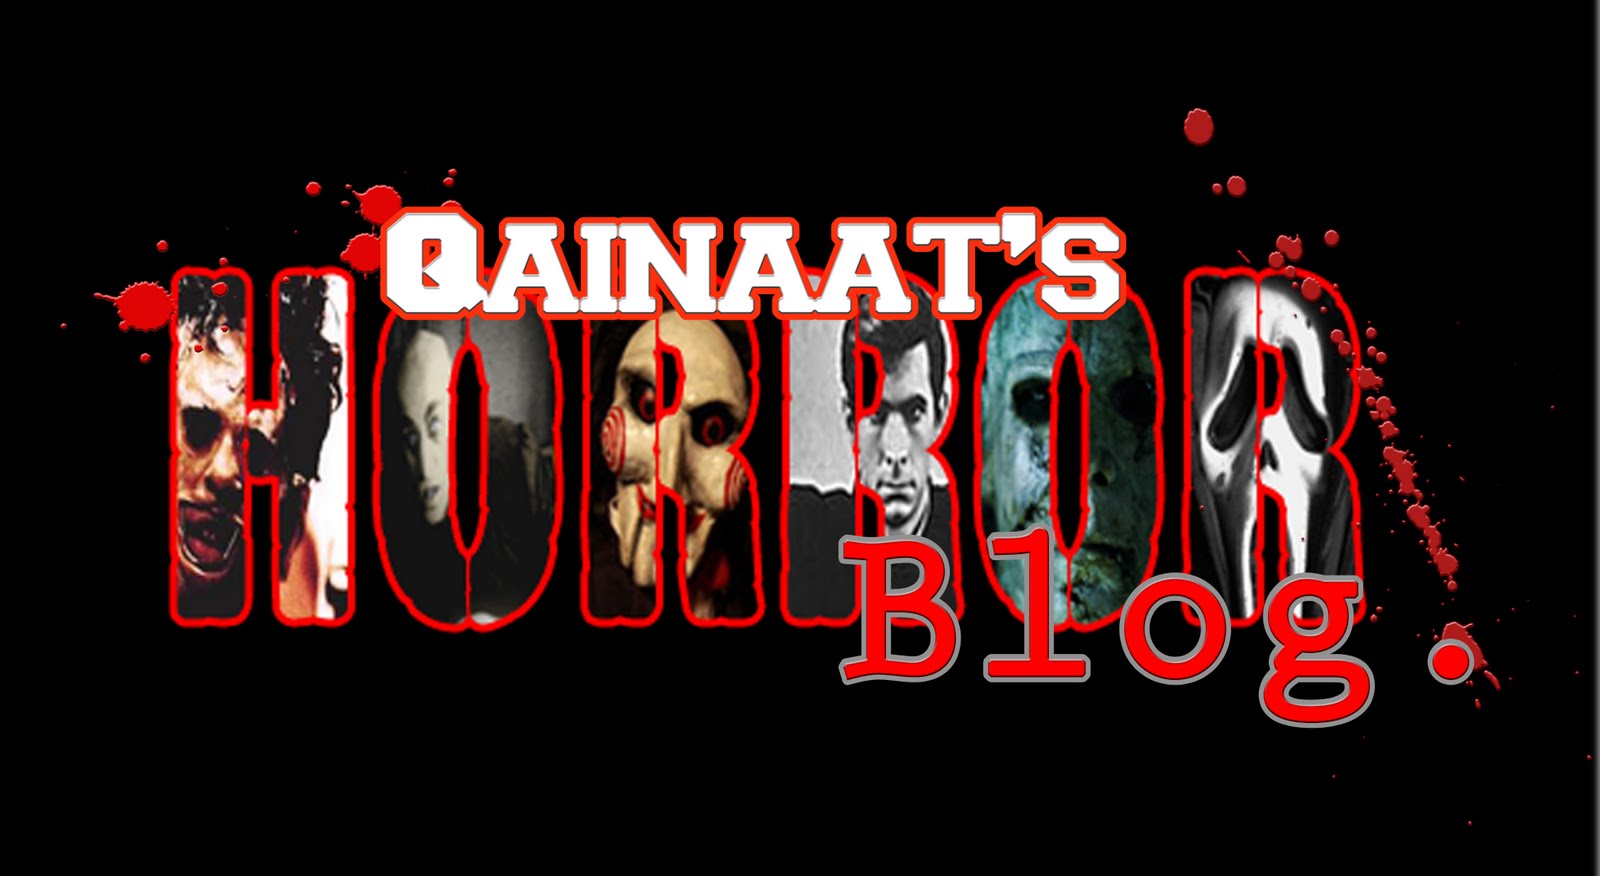 Qainaat's Horror Trailer